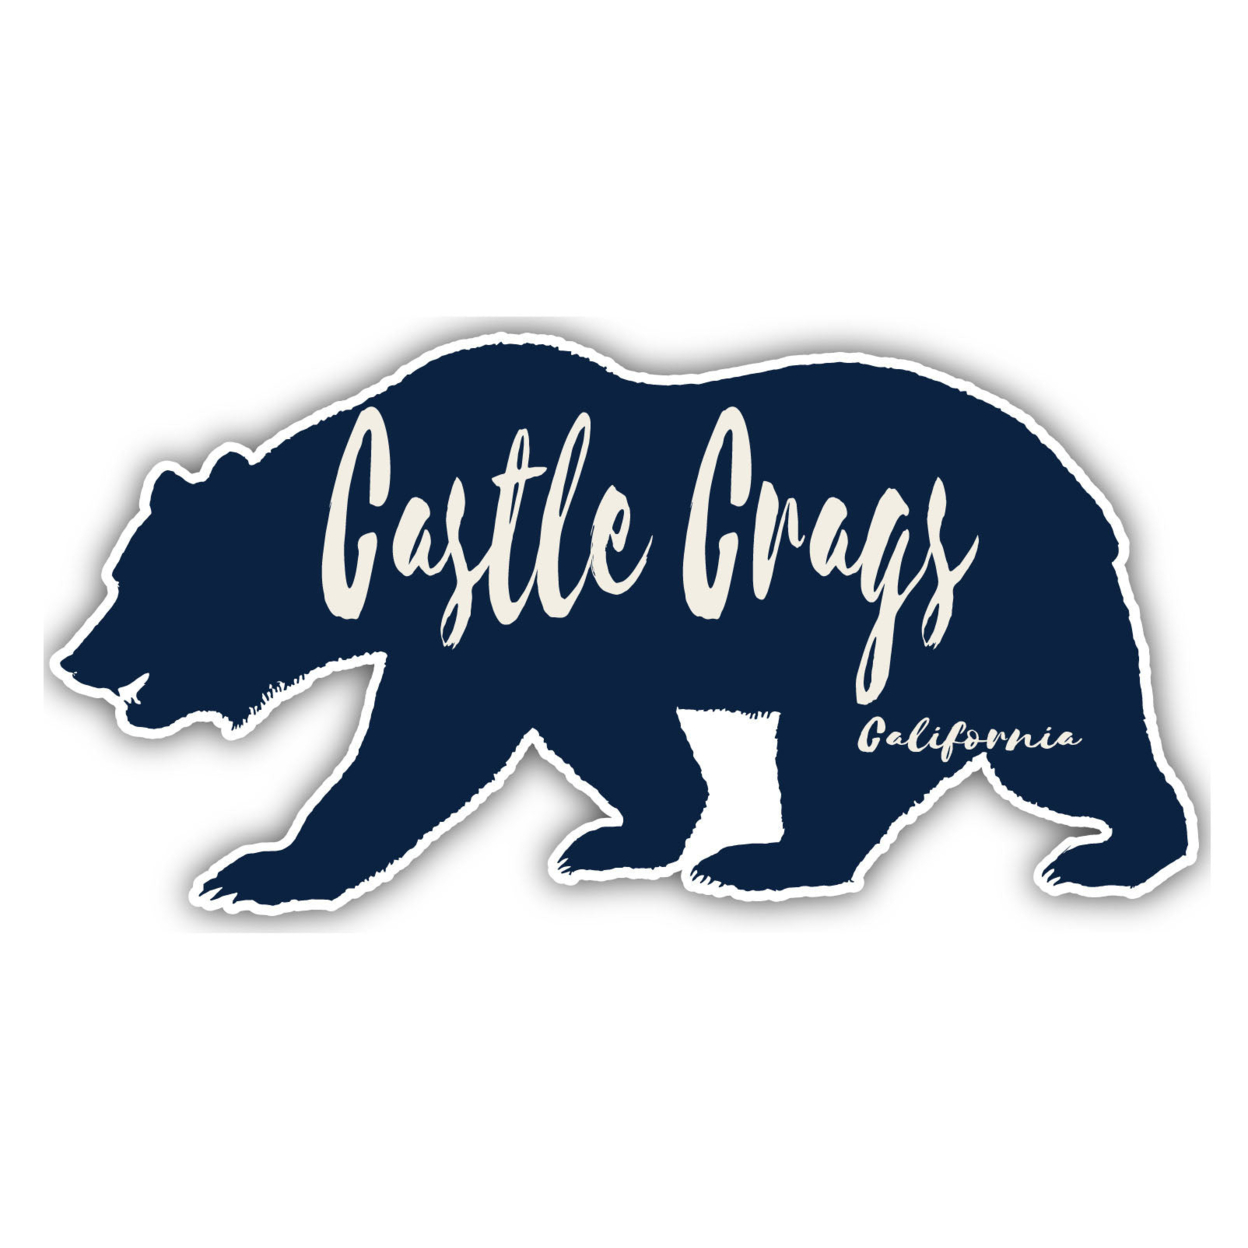 Castle Crags California Souvenir Decorative Stickers (Choose Theme And Size) - Single Unit, 2-Inch, Bear